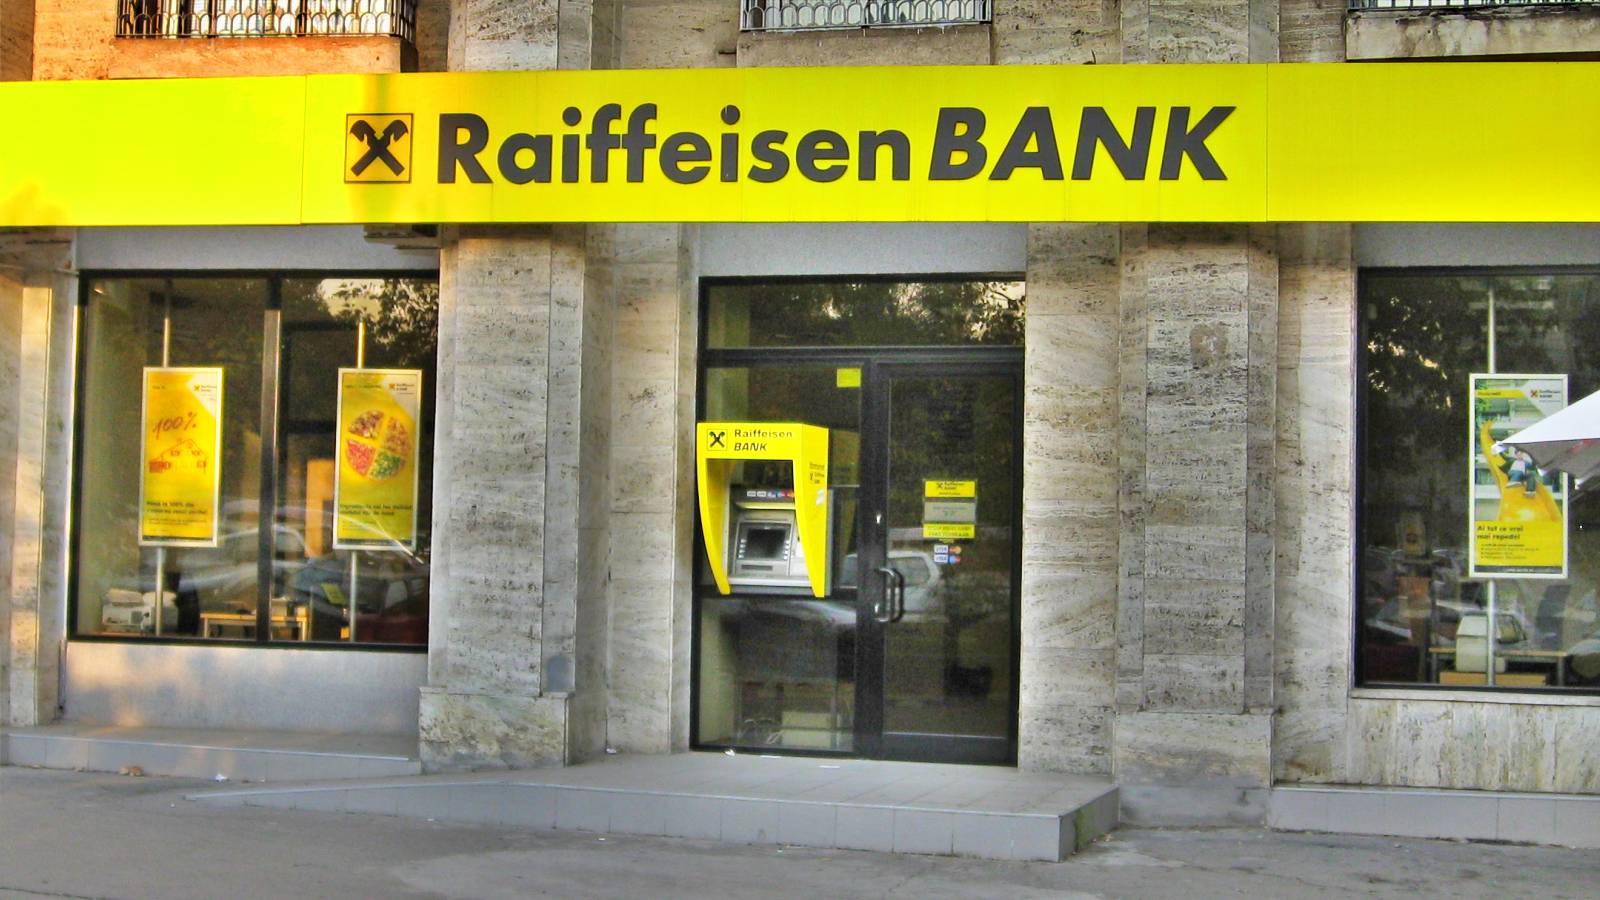 Raiffeisen Bank reasons